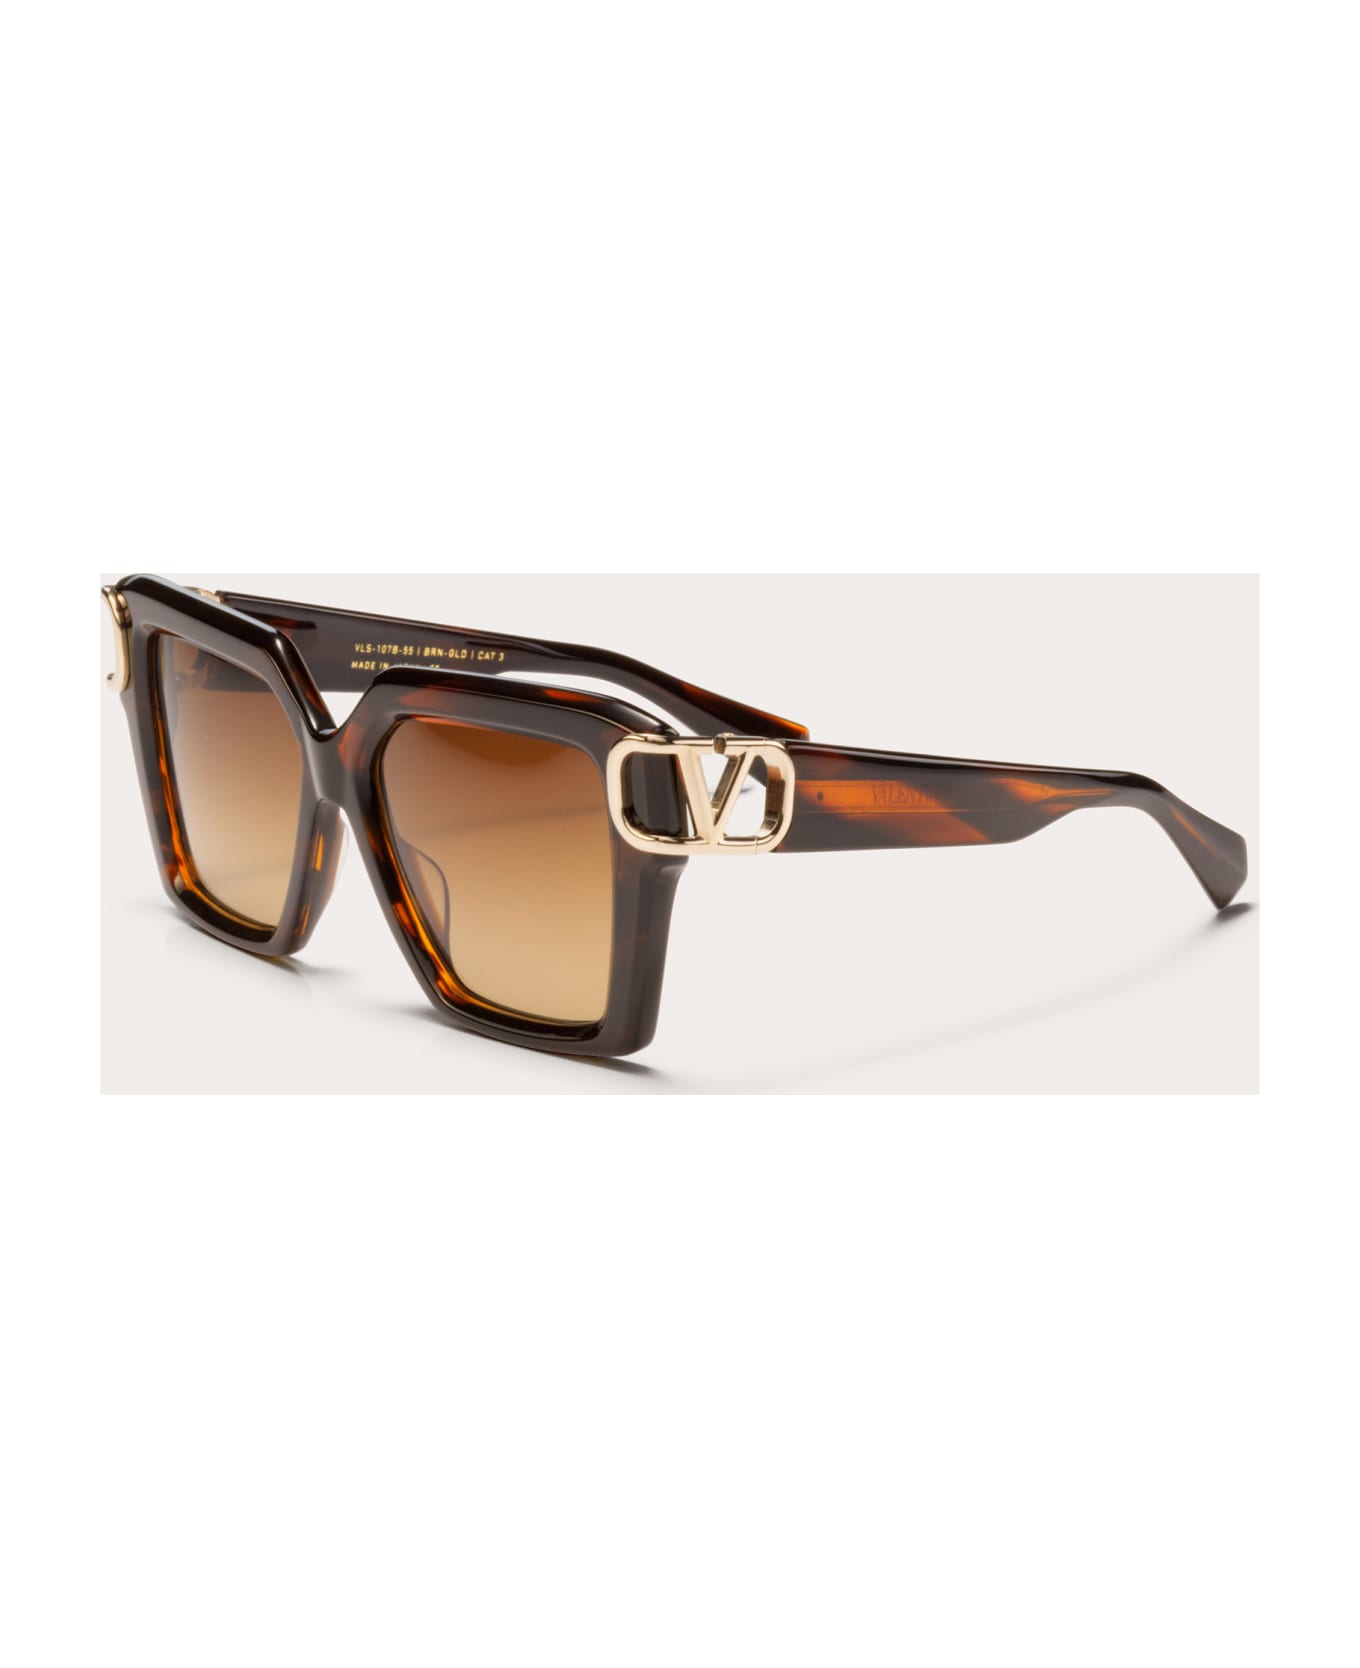 Valentino Eyewear Uno - Brown Swirl / White Gold Sunglasses - brown/gold